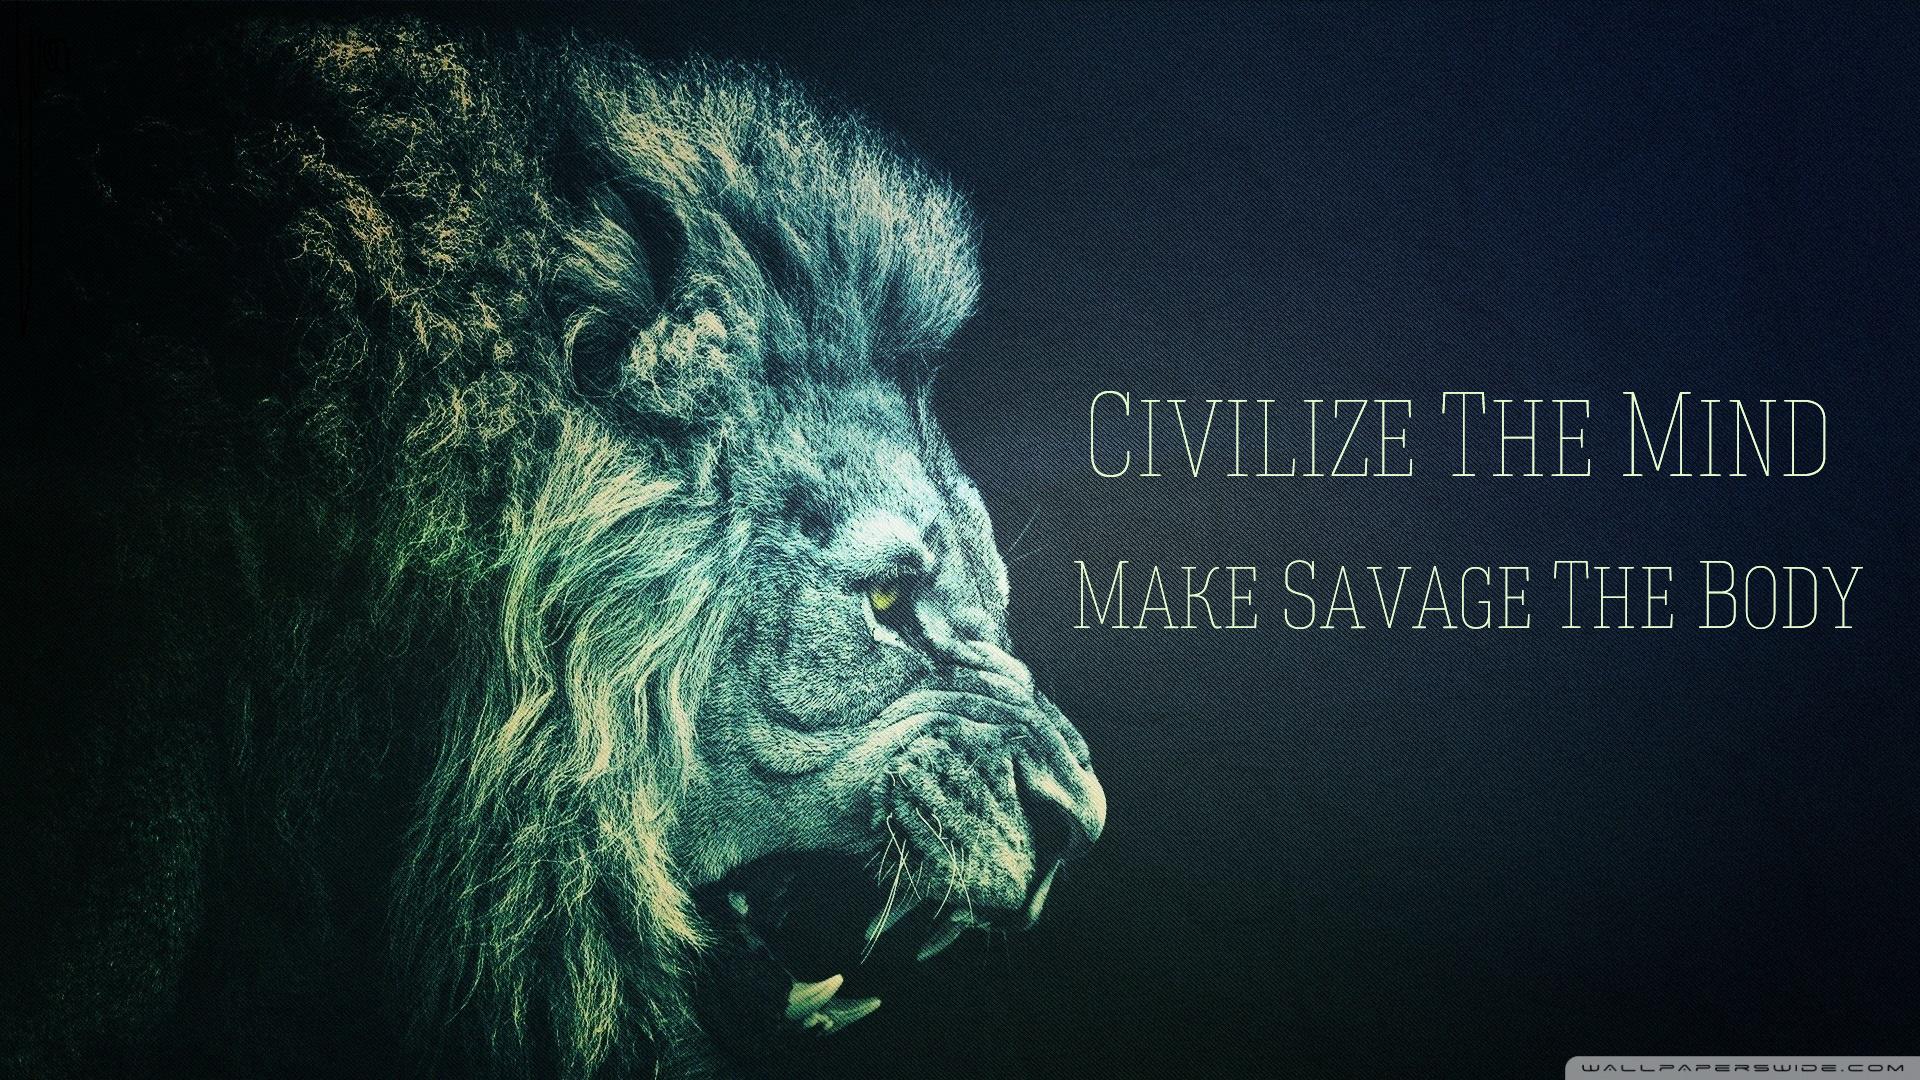 Image] [1920x1080] Motivational Wallpaper | Civilize the Savage ...